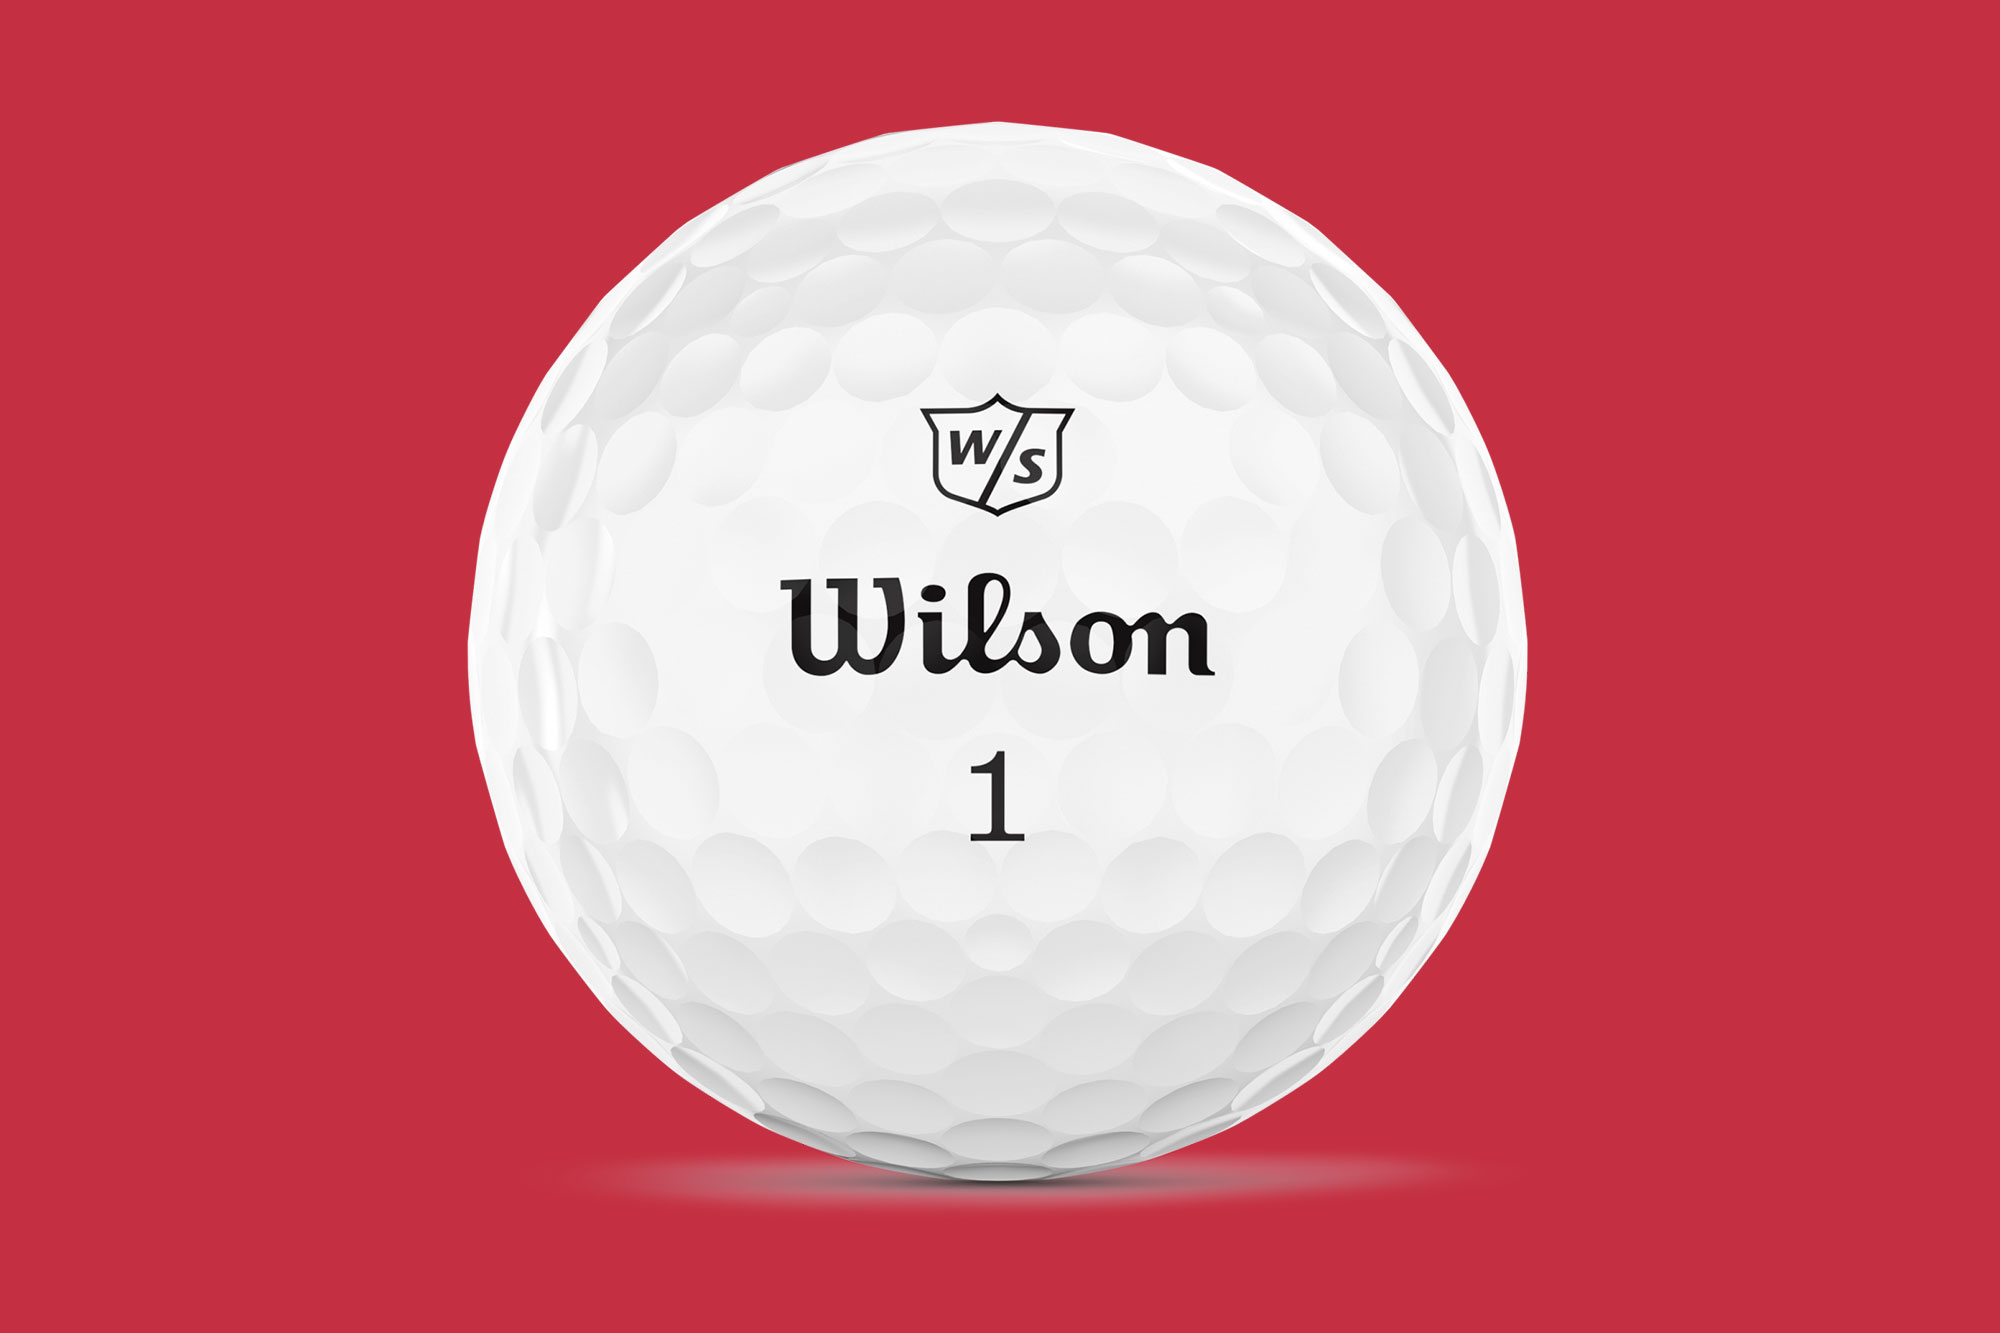 Wilson Triad golf ball